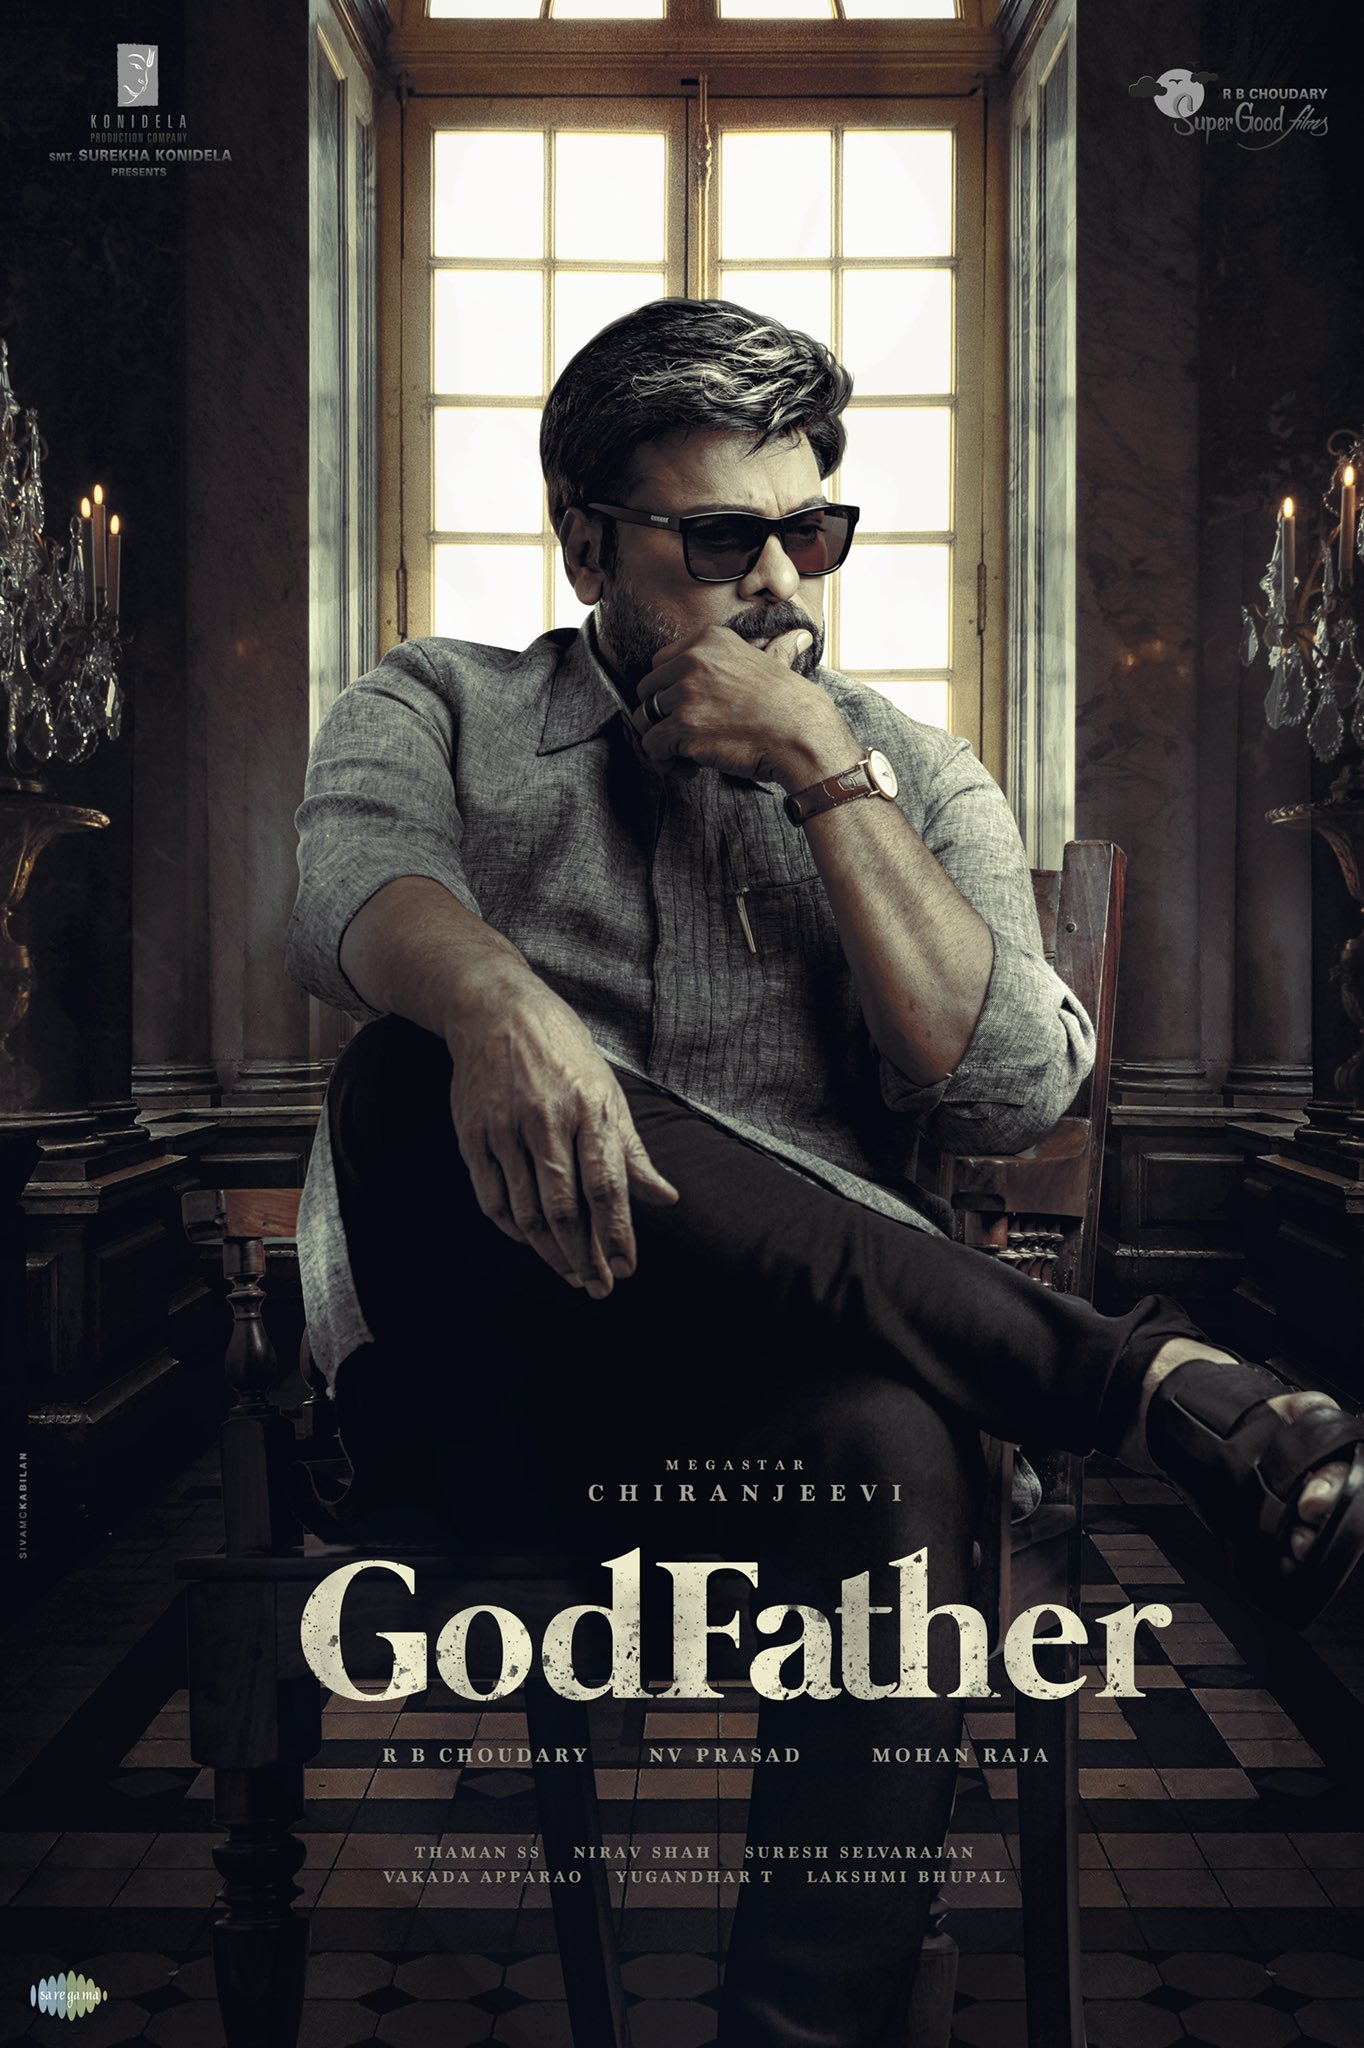 Megastar Chiranjeevi's Godfather Movie First Look Poster HD